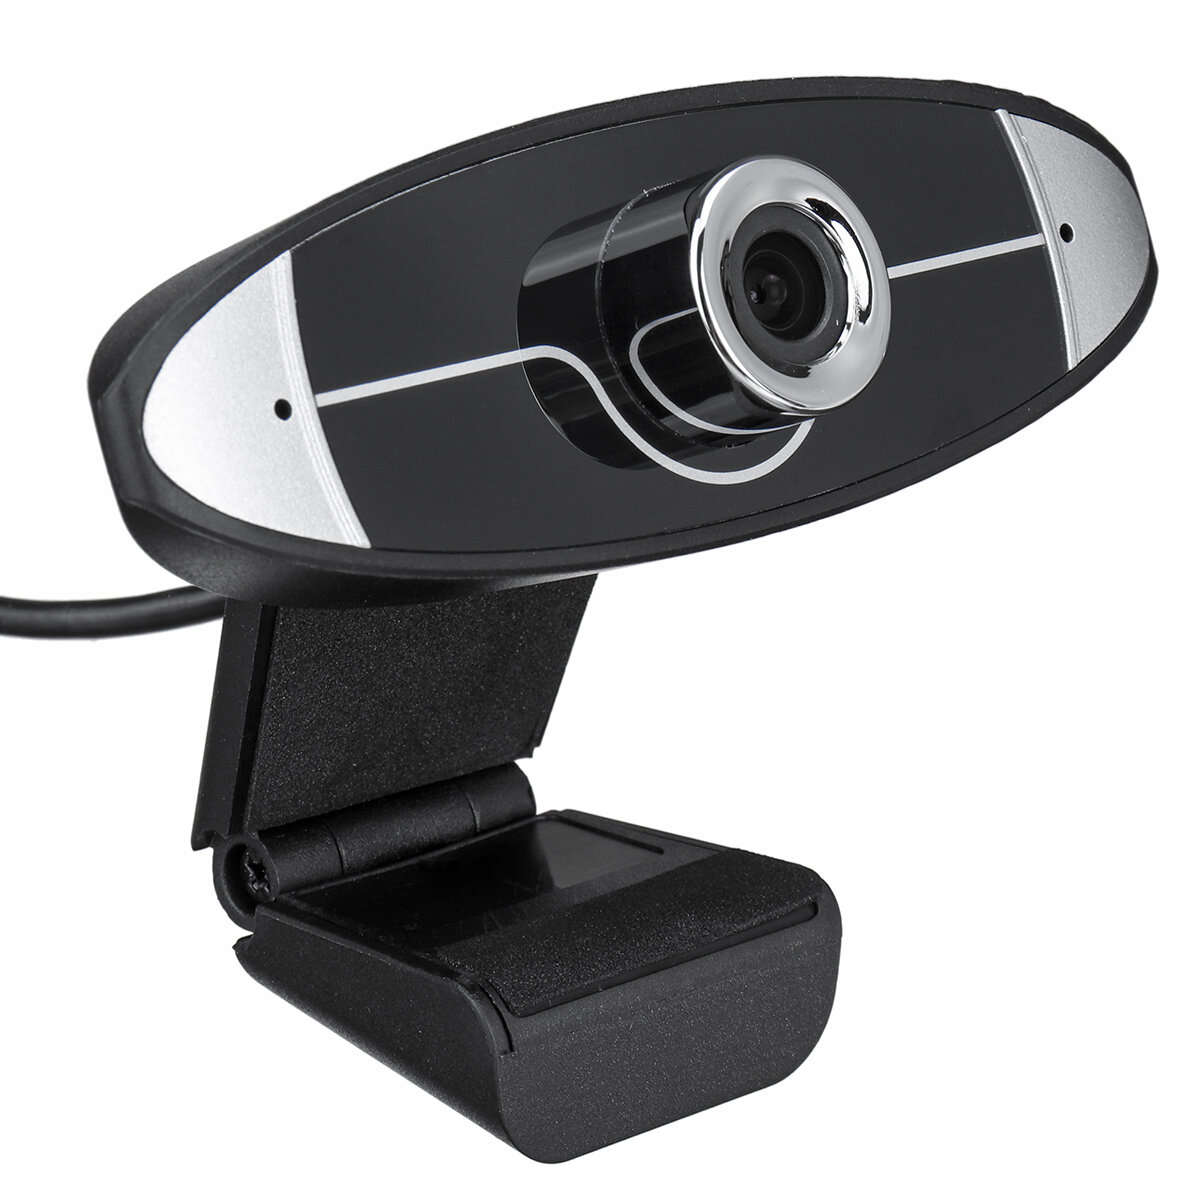 USB 2.0 Webcam Auto Focusing Web Camera Cam with Microphone For Laptop Desktop COD